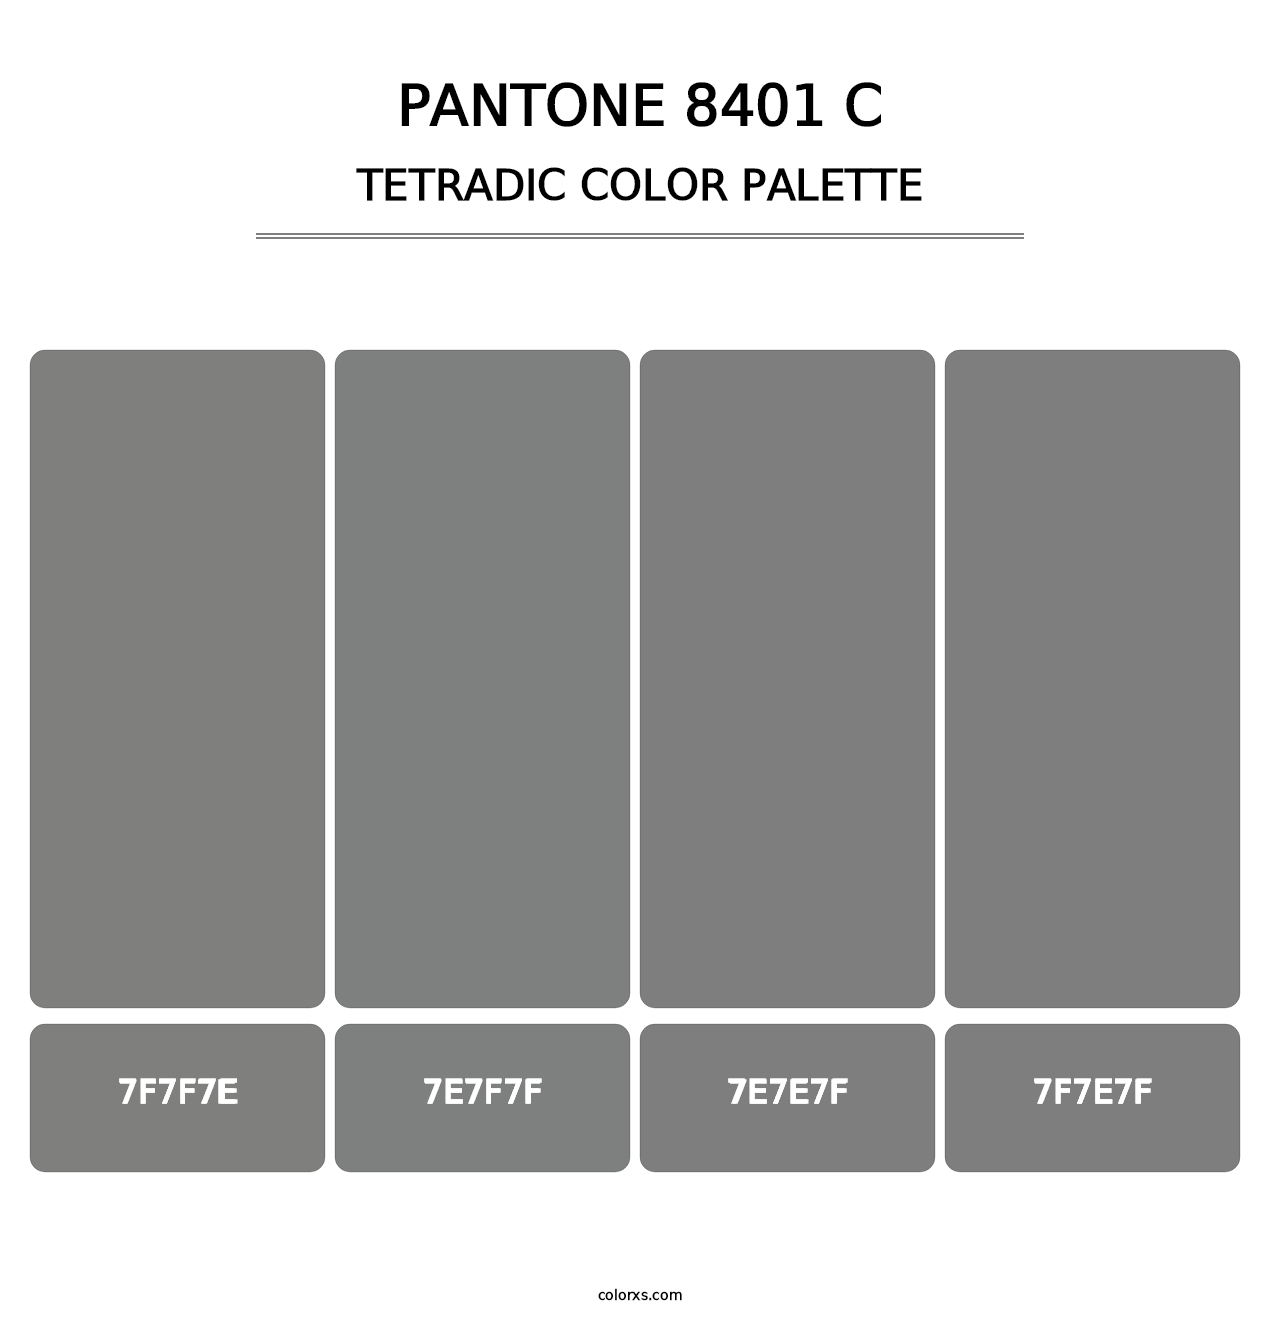 PANTONE 8401 C - Tetradic Color Palette